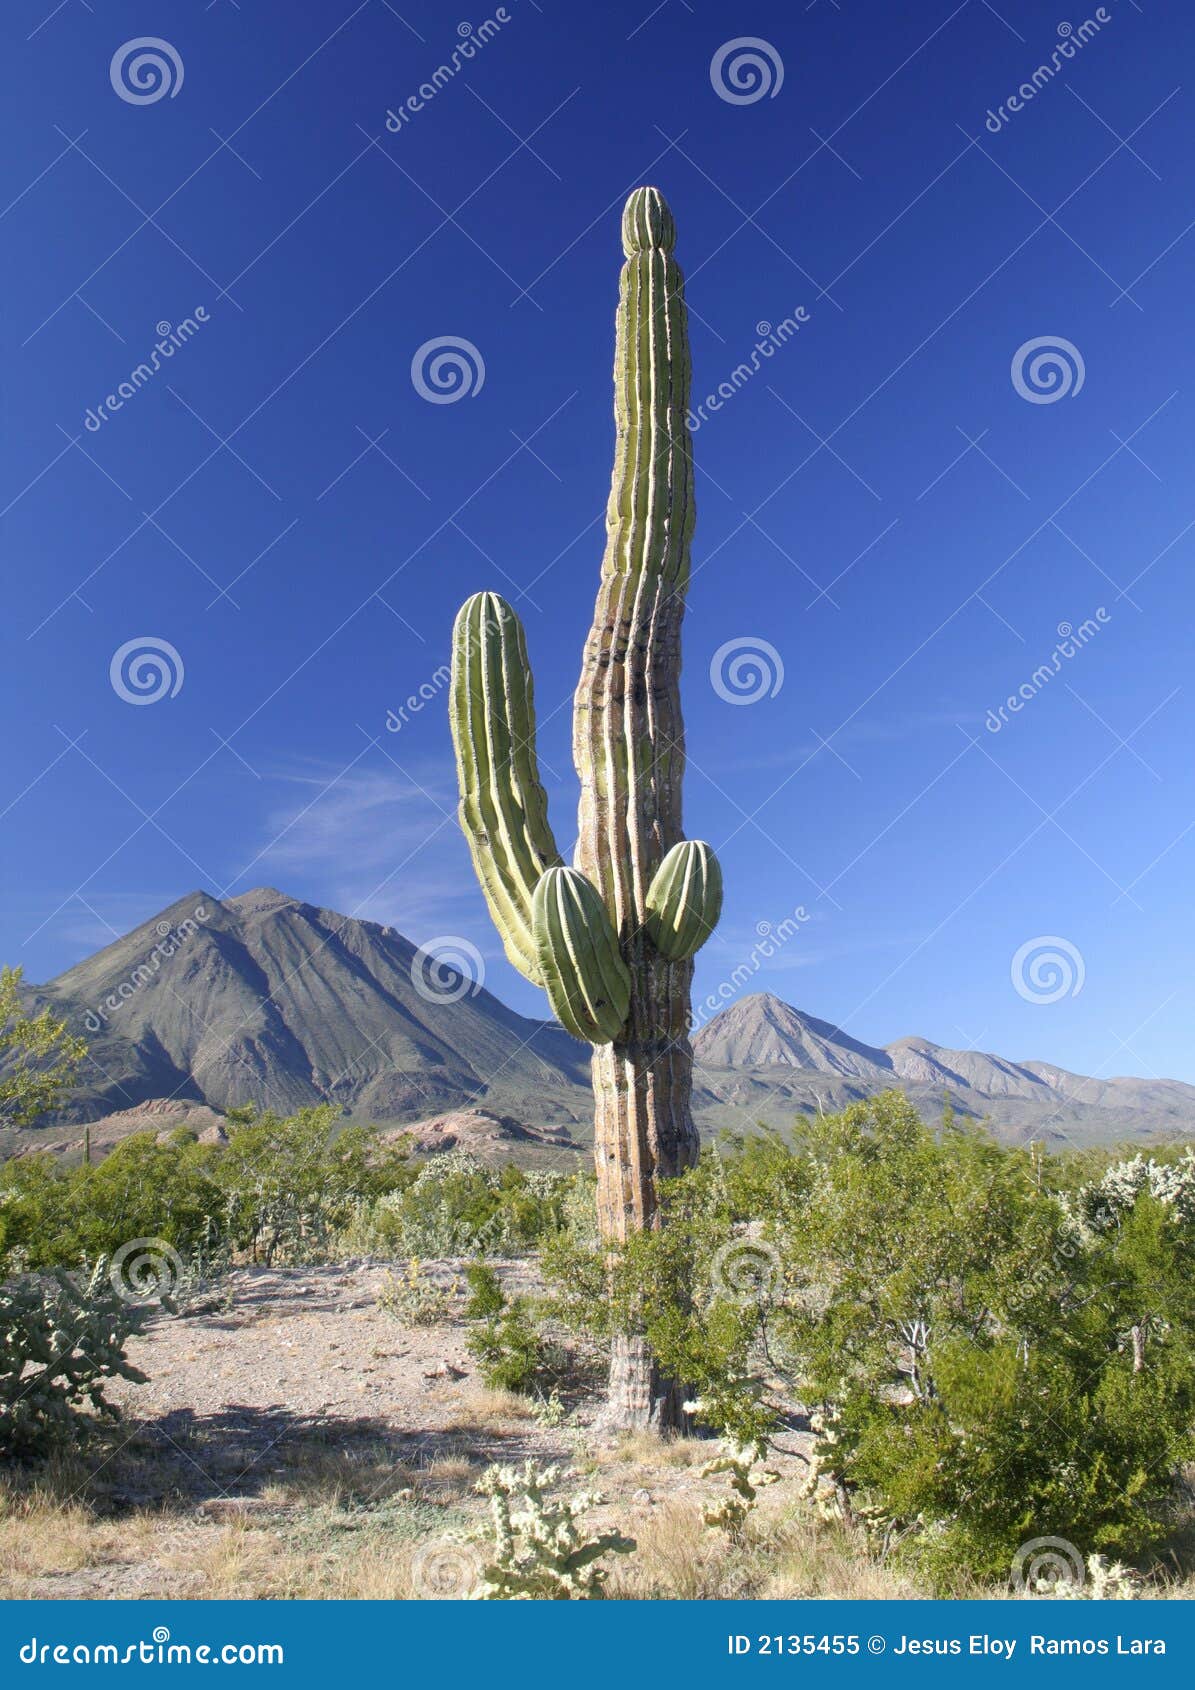 cactus with volcanoes